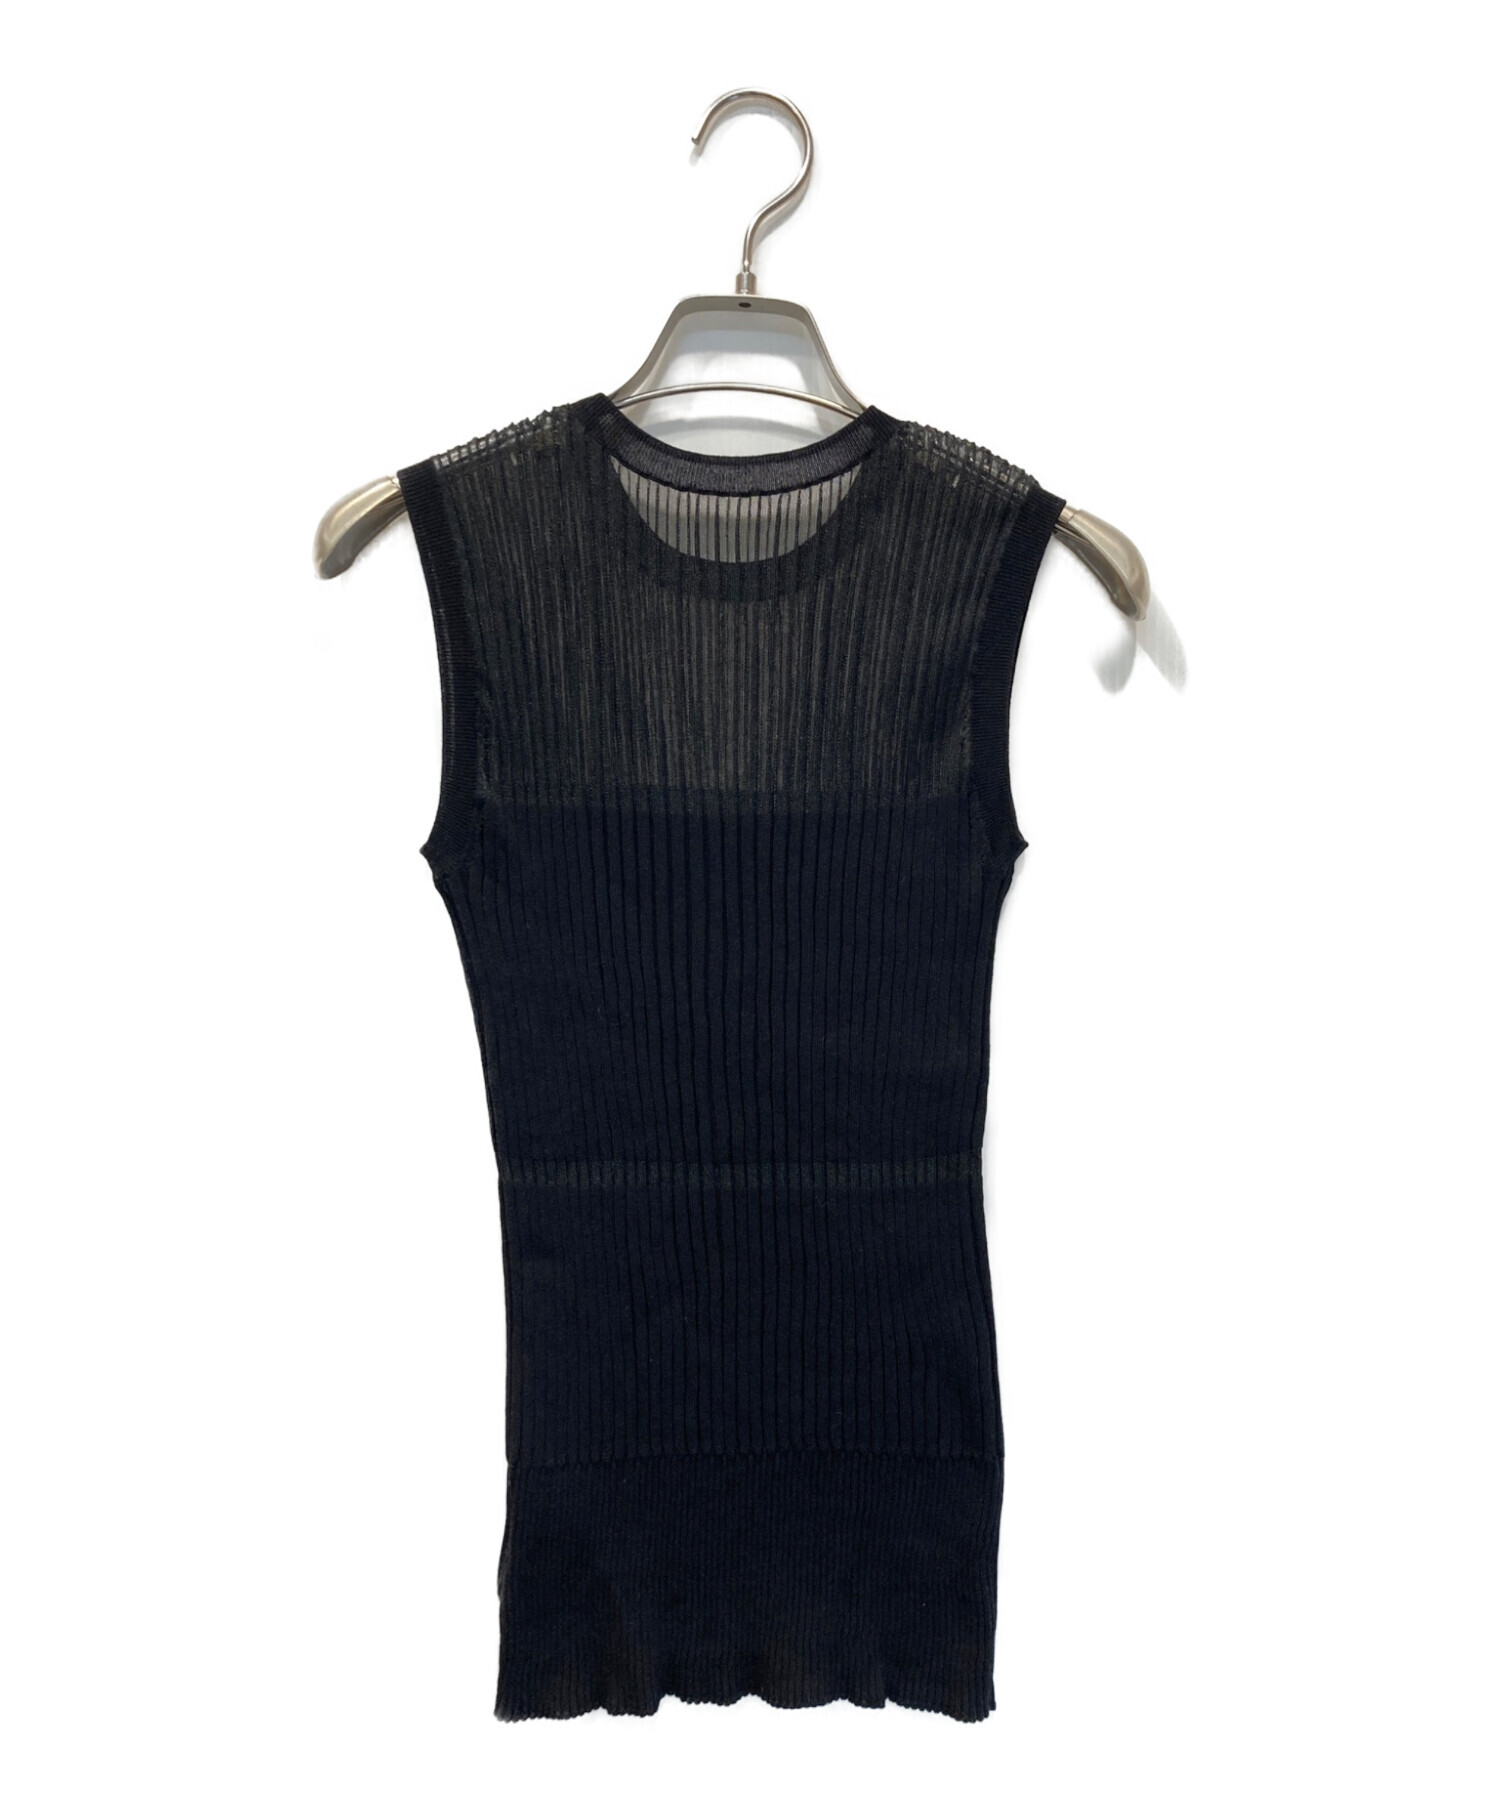 LE CIEL BLEU (ルシェルブルー) Transparent Sleeveless Knit Tops ブラック サイズ:36